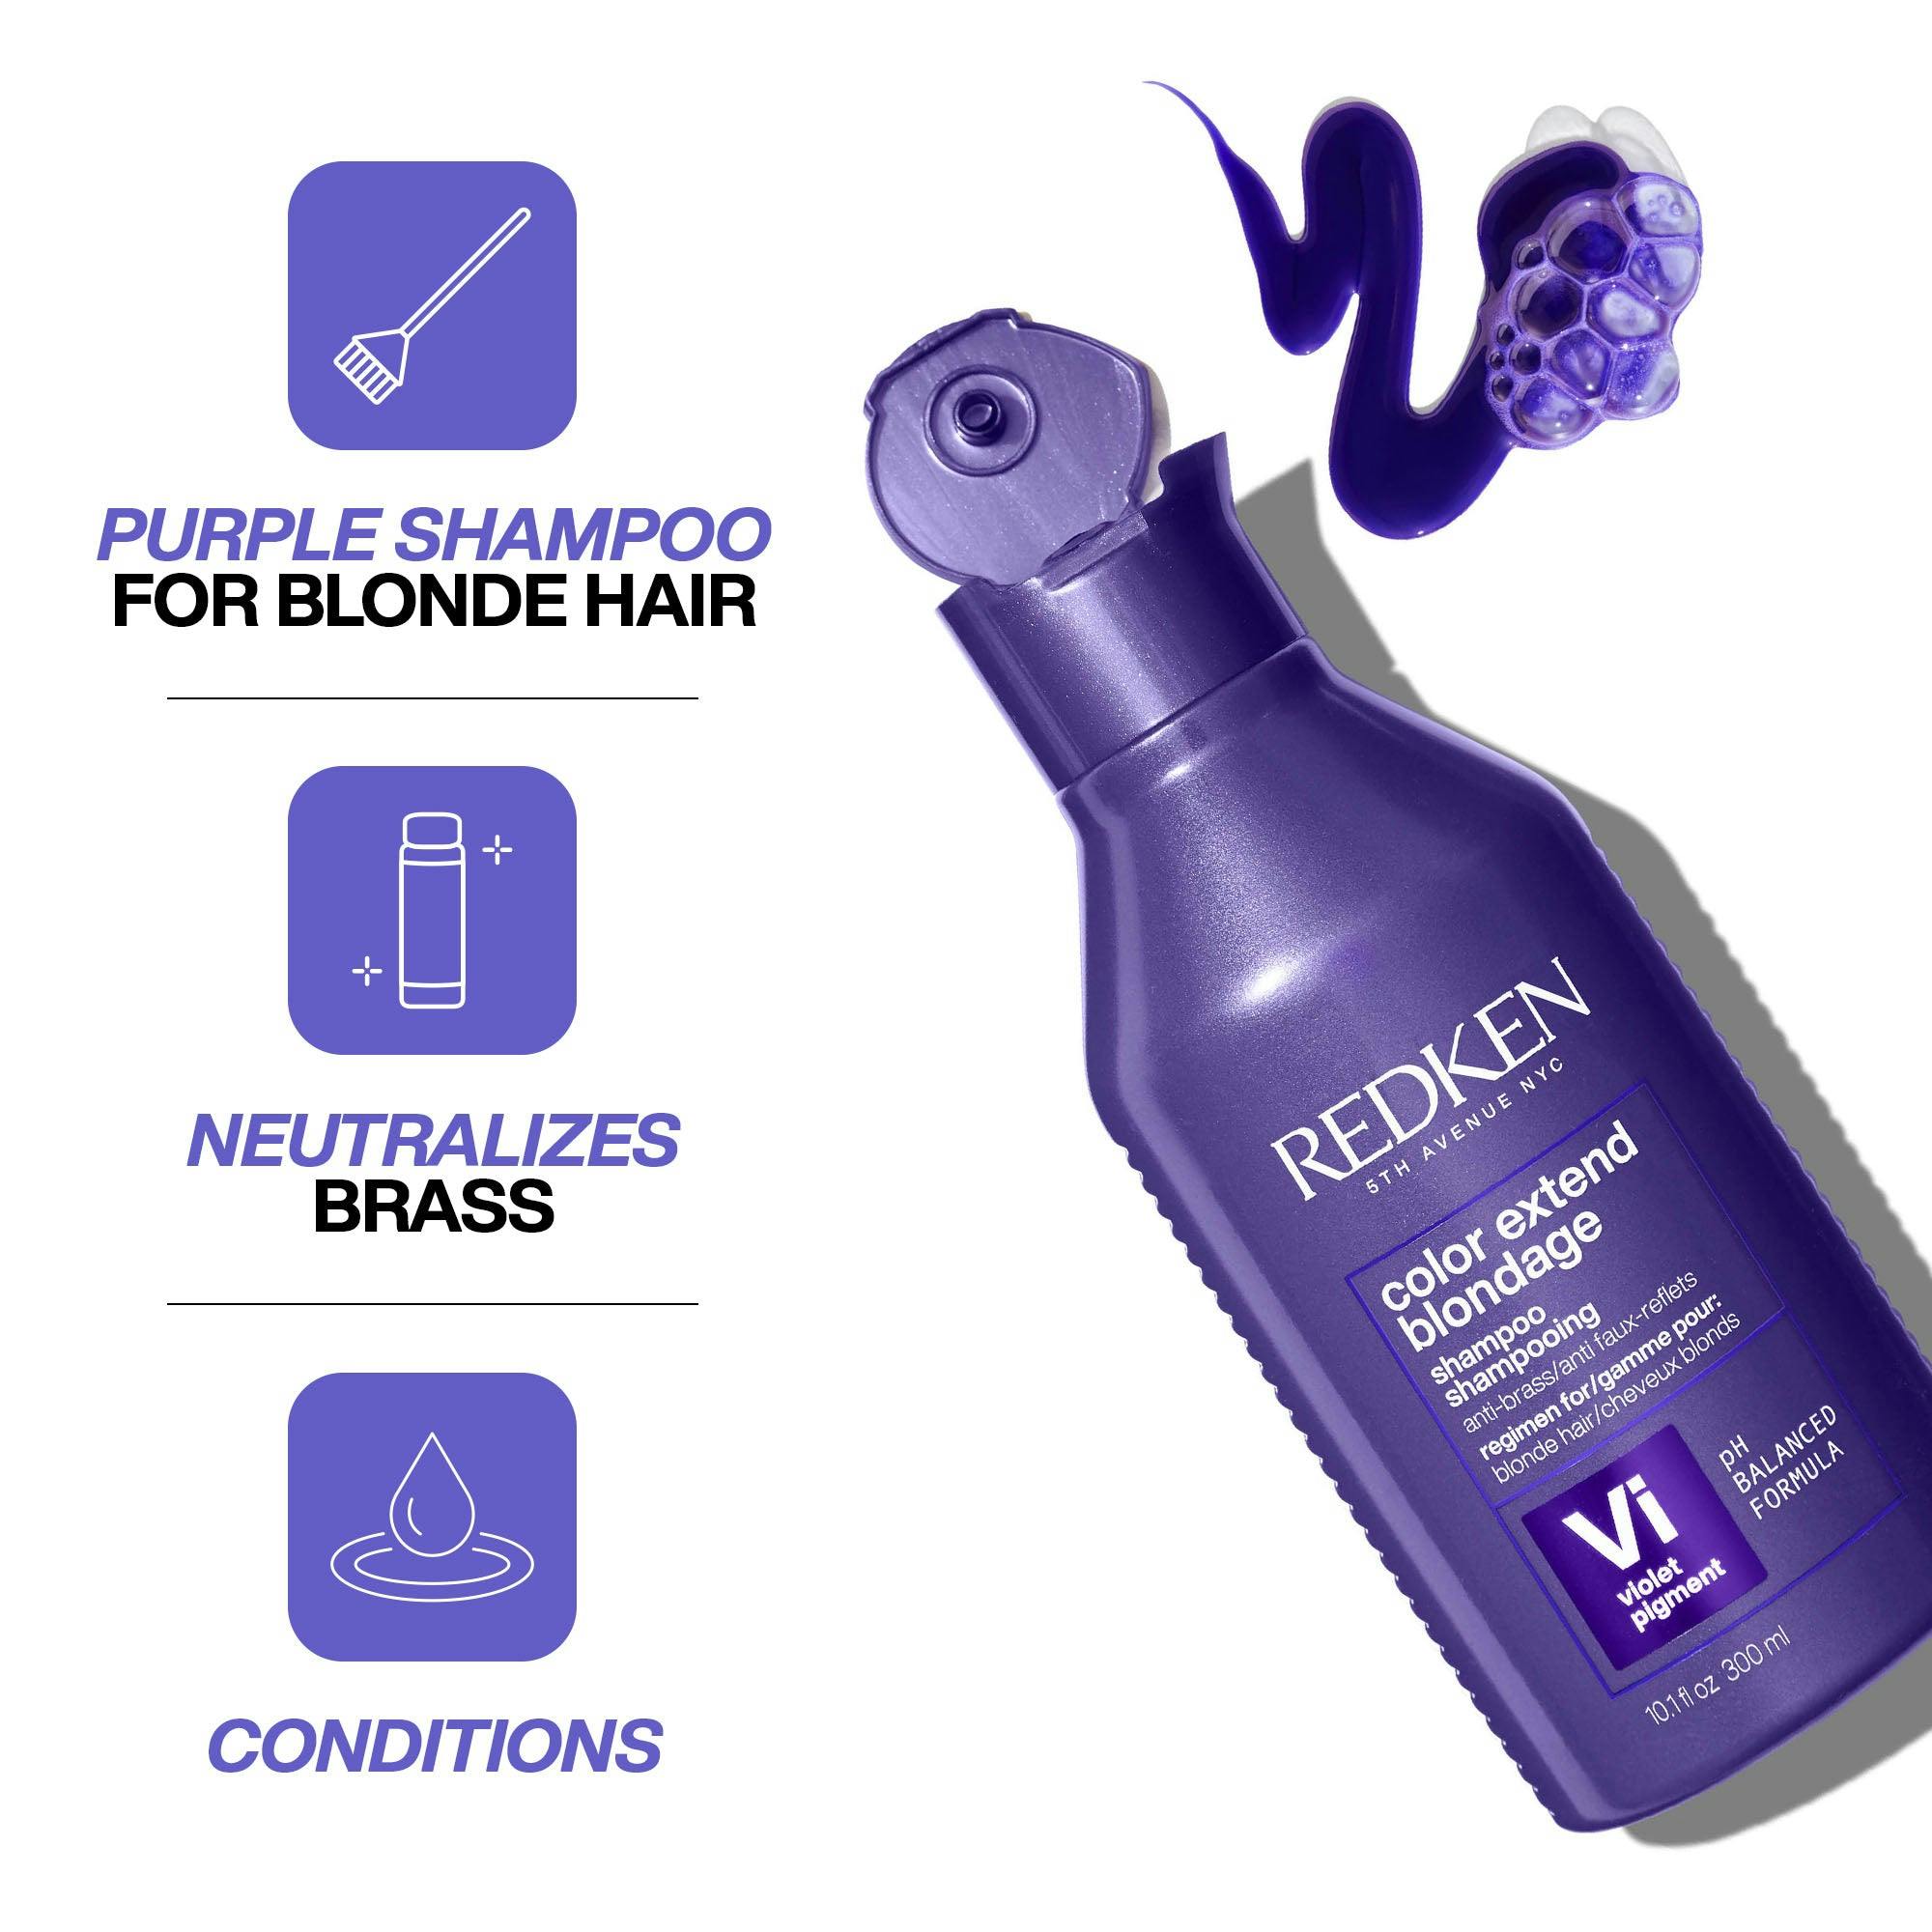 Redken Color Extend Blondage Color Depositing Purple Shampoo 300ml